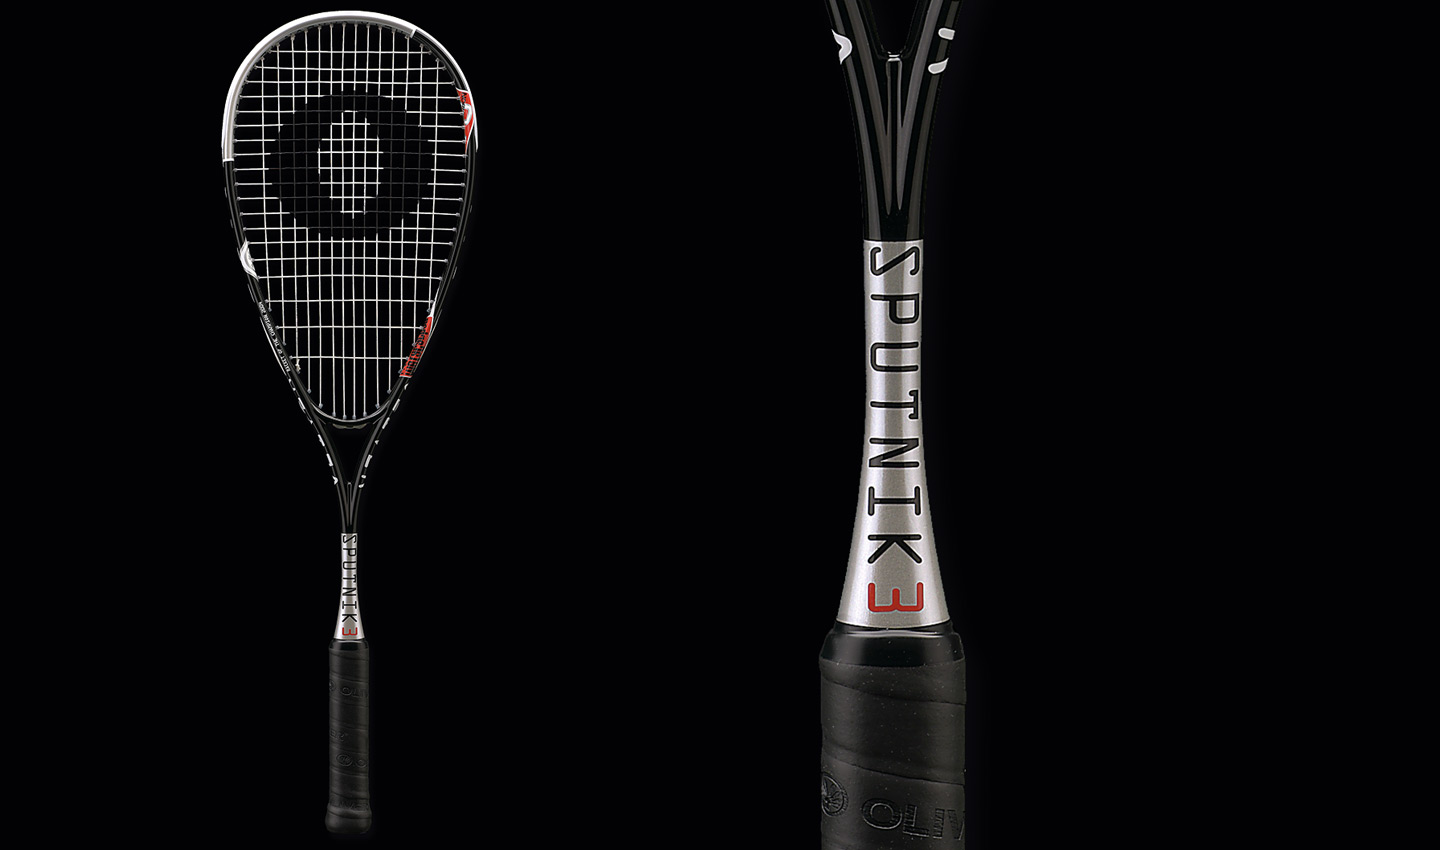 P12-Werbeagentur-Heidelberg Referenz OLIVER-Squash Racket-Design Sputnik